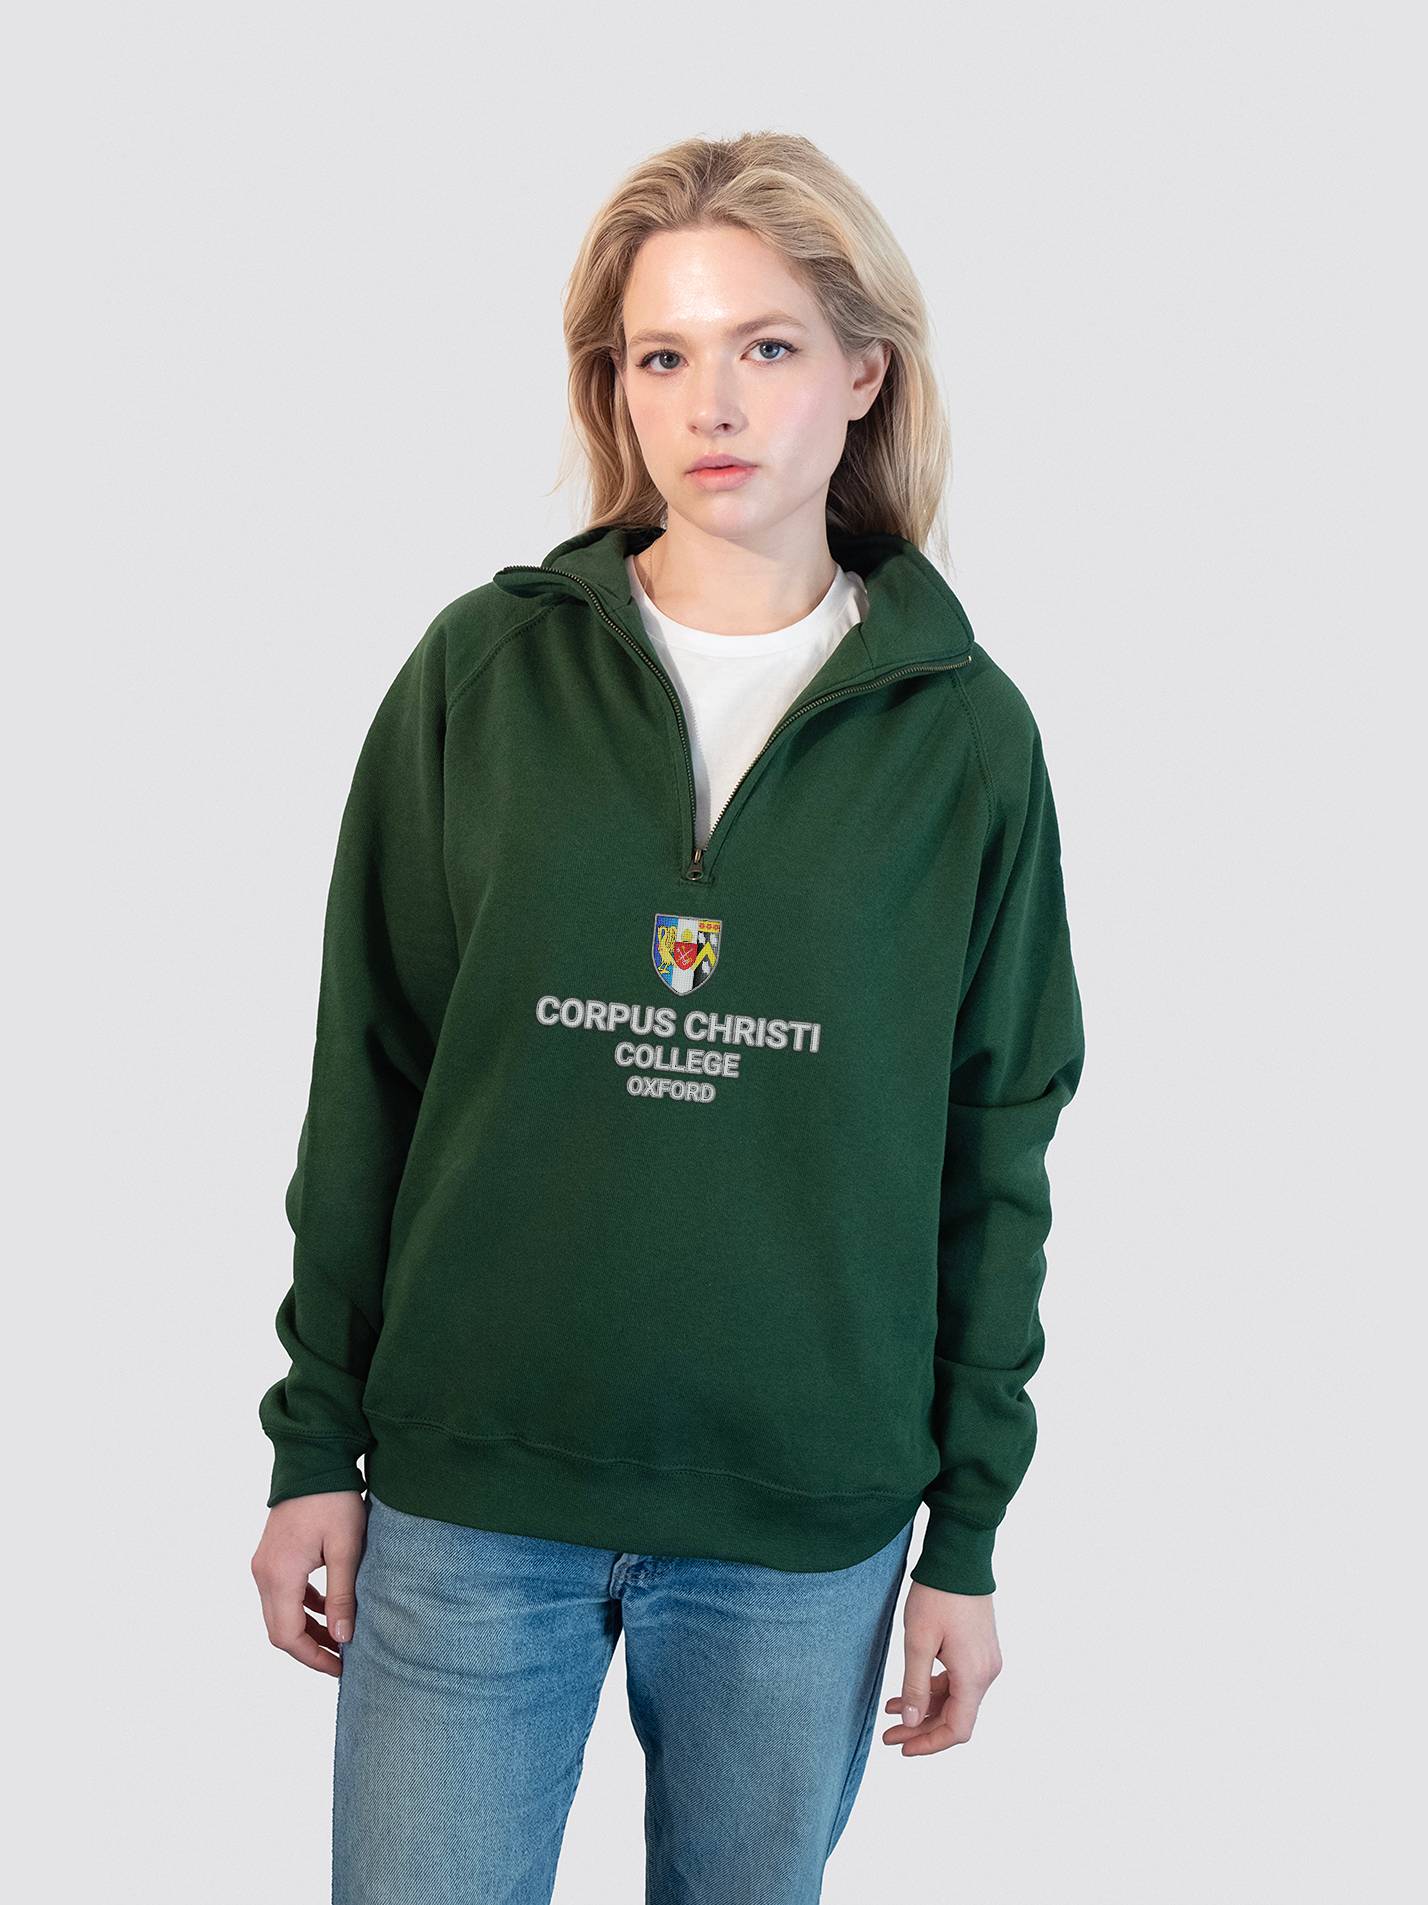 Corpus Christi College Oxford Heritage Unisex 1/4 Zip Sweatshirt